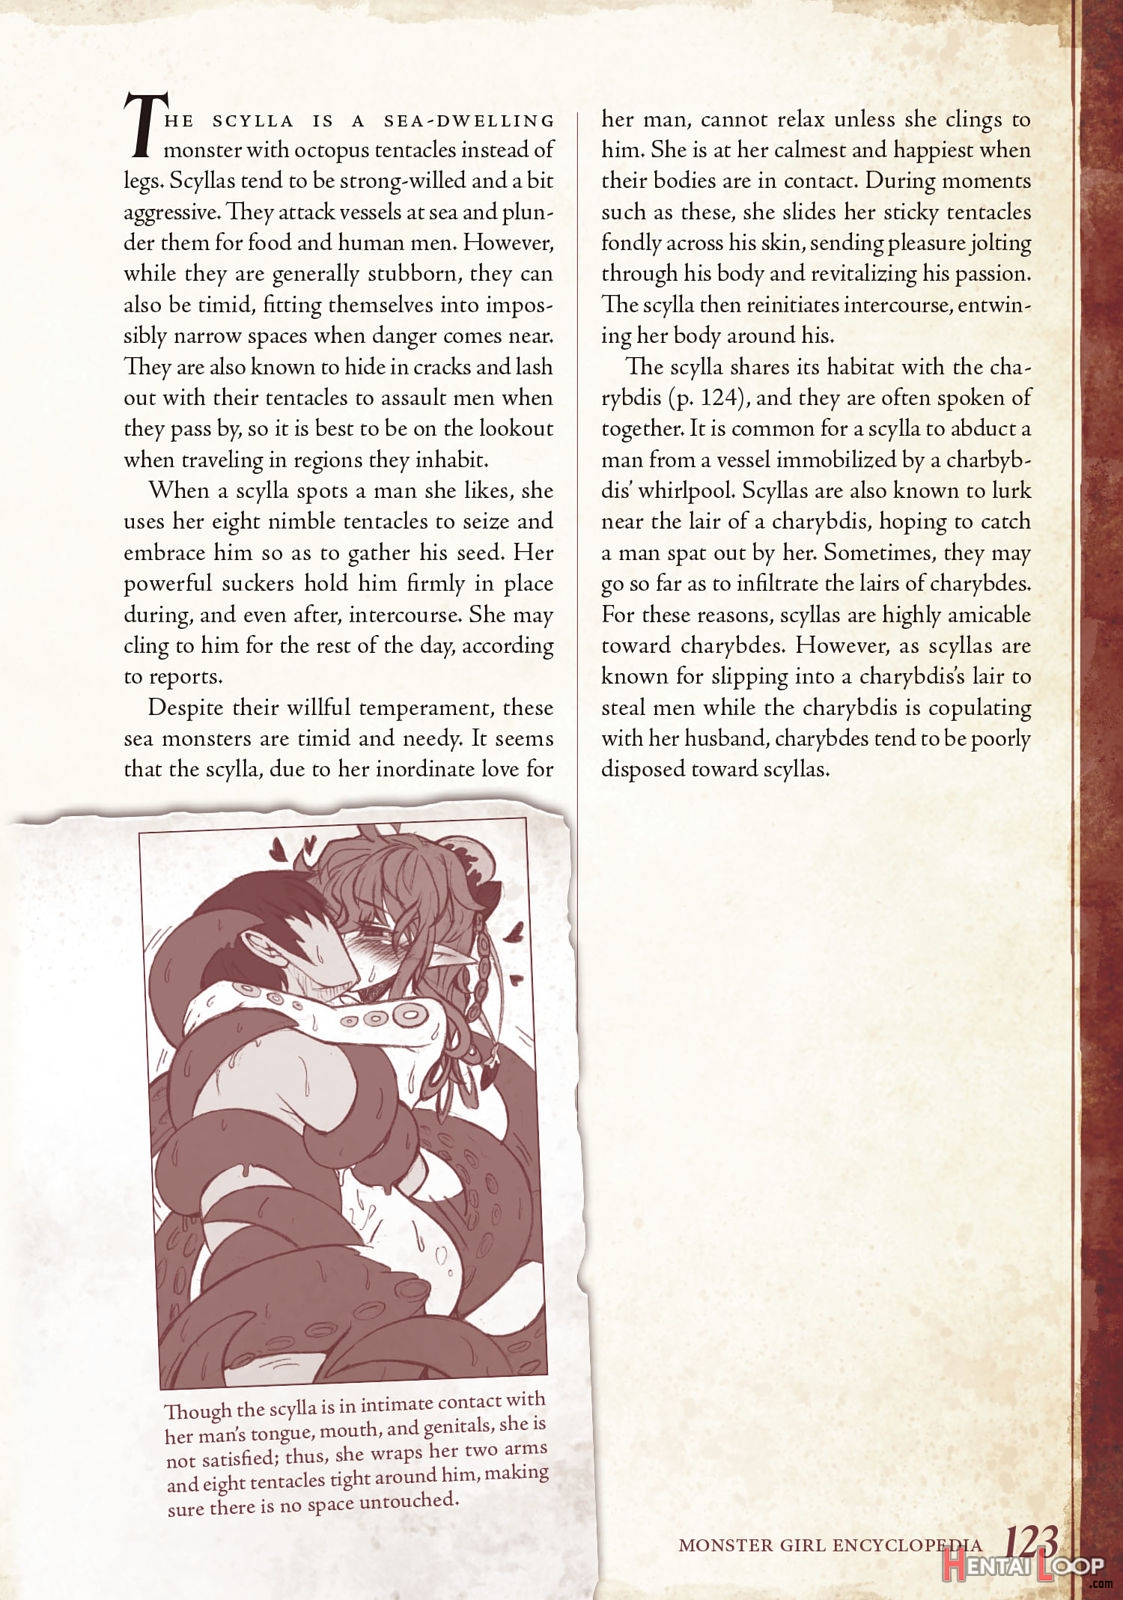 Monster Girl Encyclopedia Vol. 1 page 124